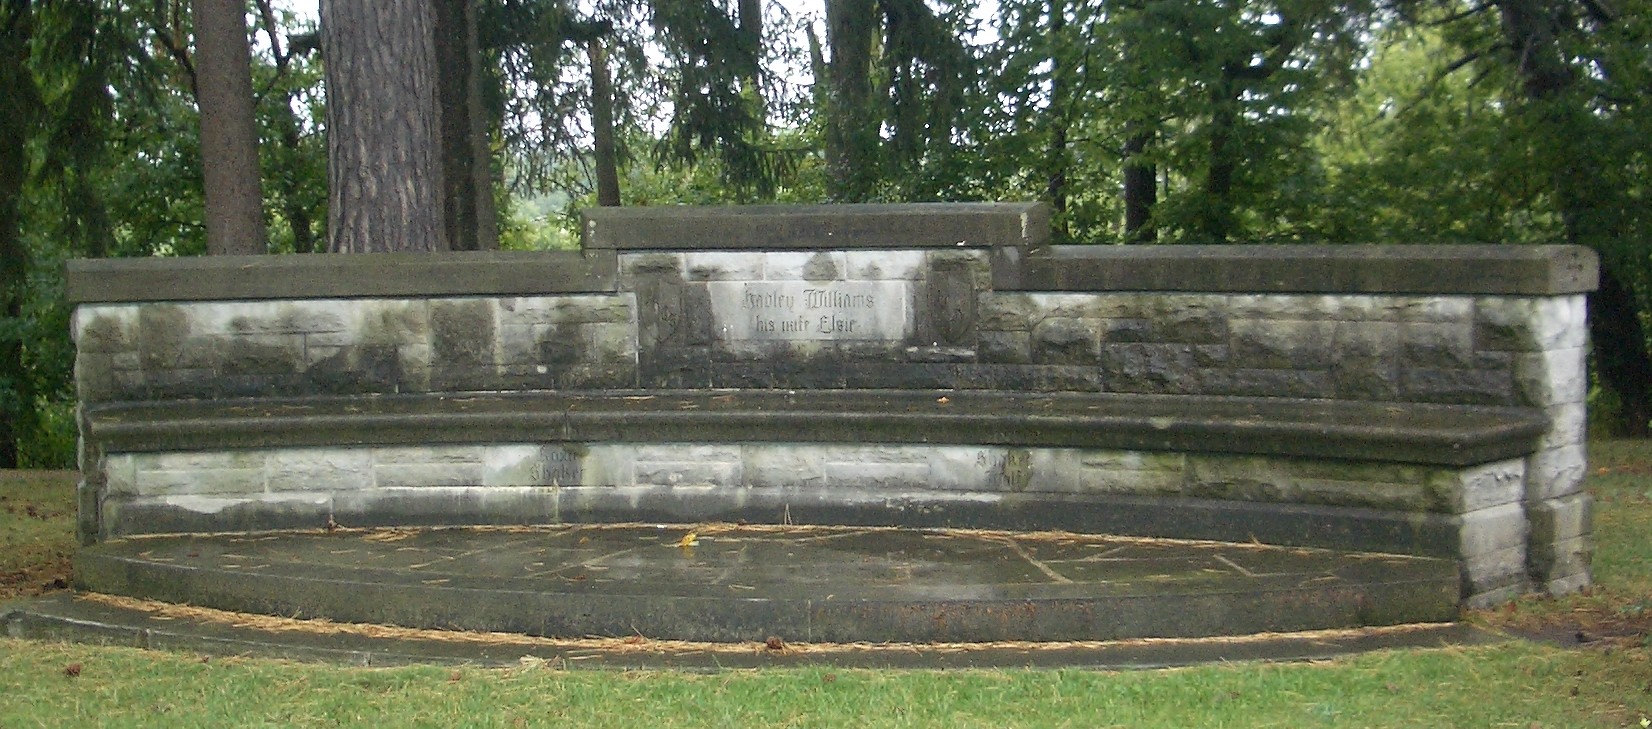 Hadley Brinsmead williams' grave